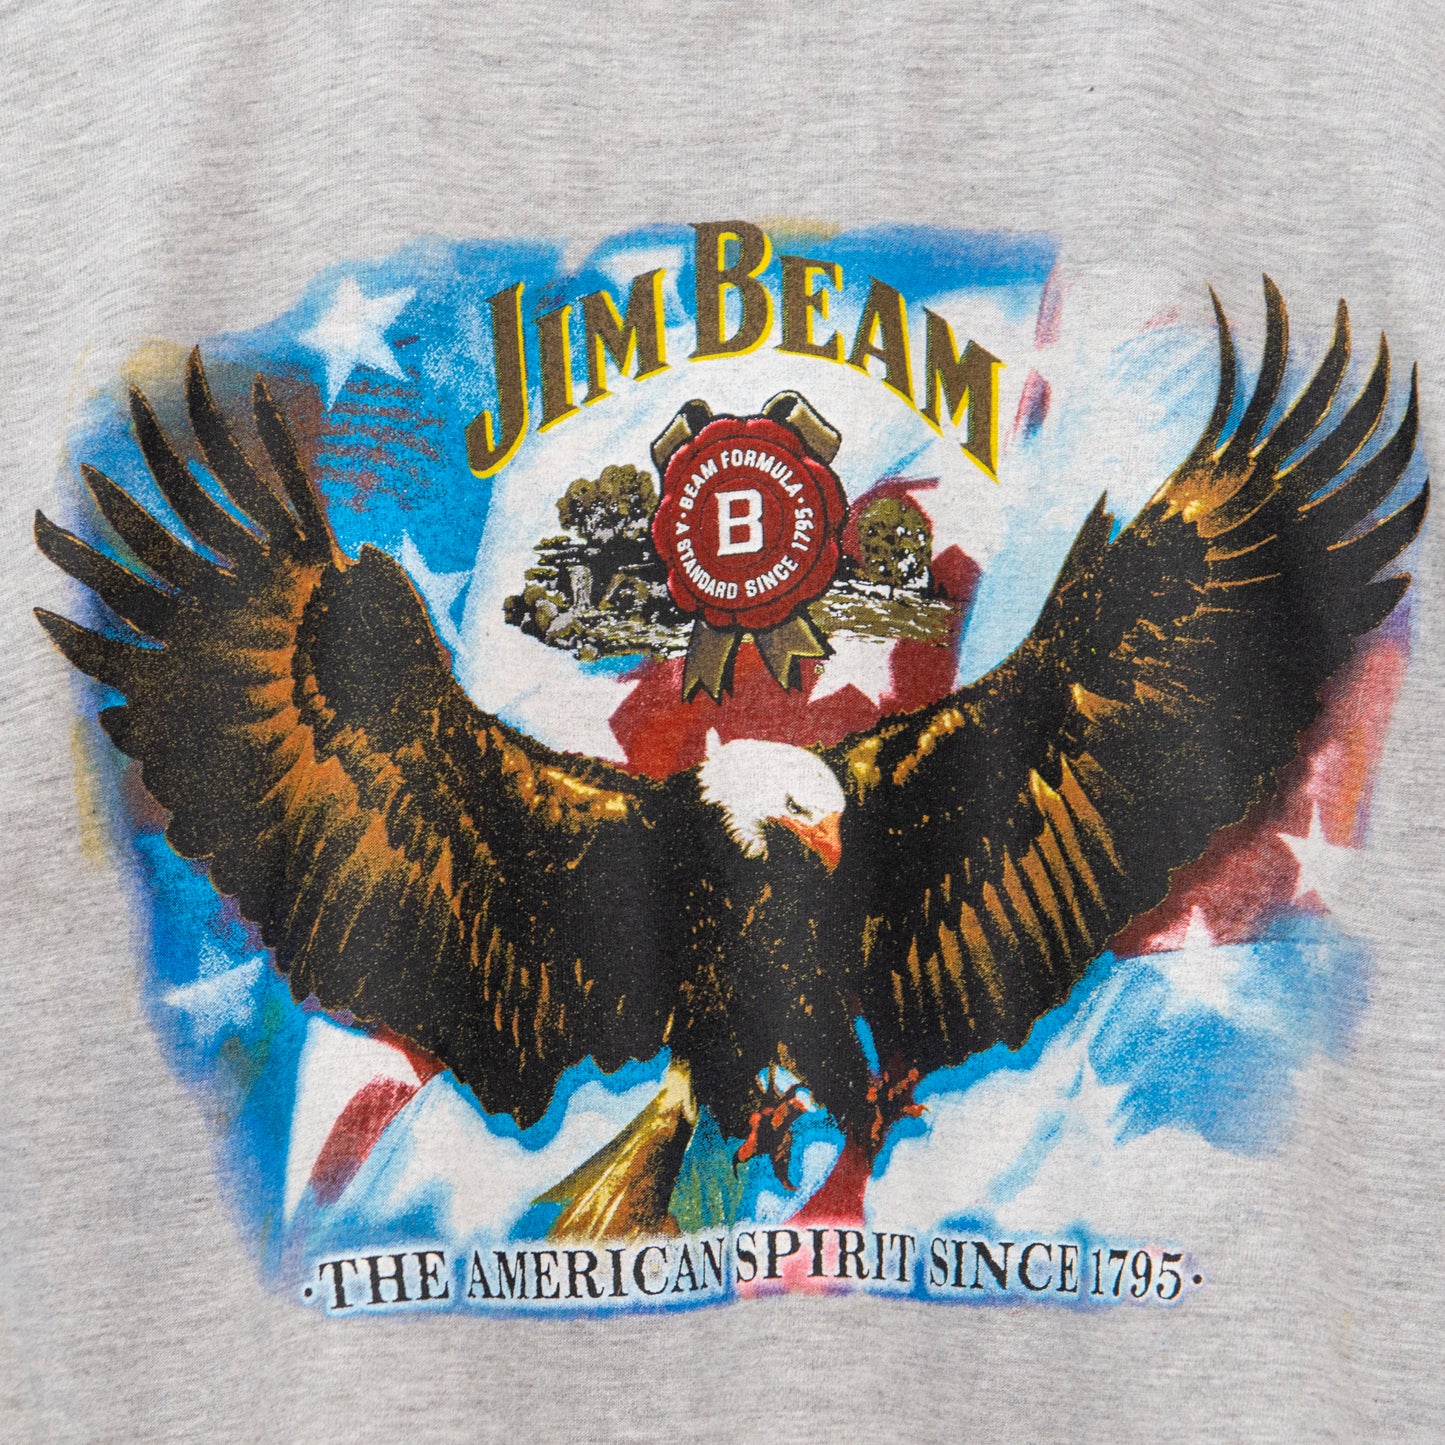 Vintage Jim Beam Eagle T-Shirt XL